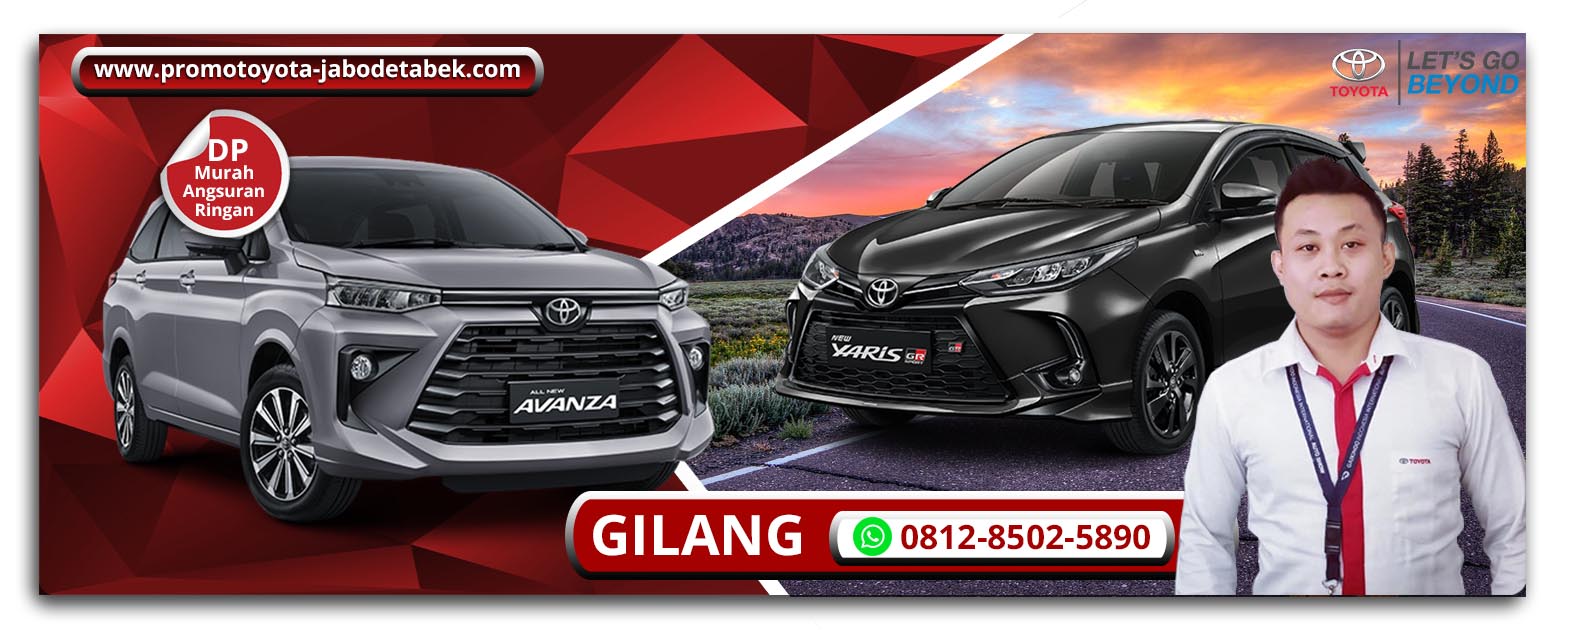 Banner Gilang Toyota Avanza Yaris